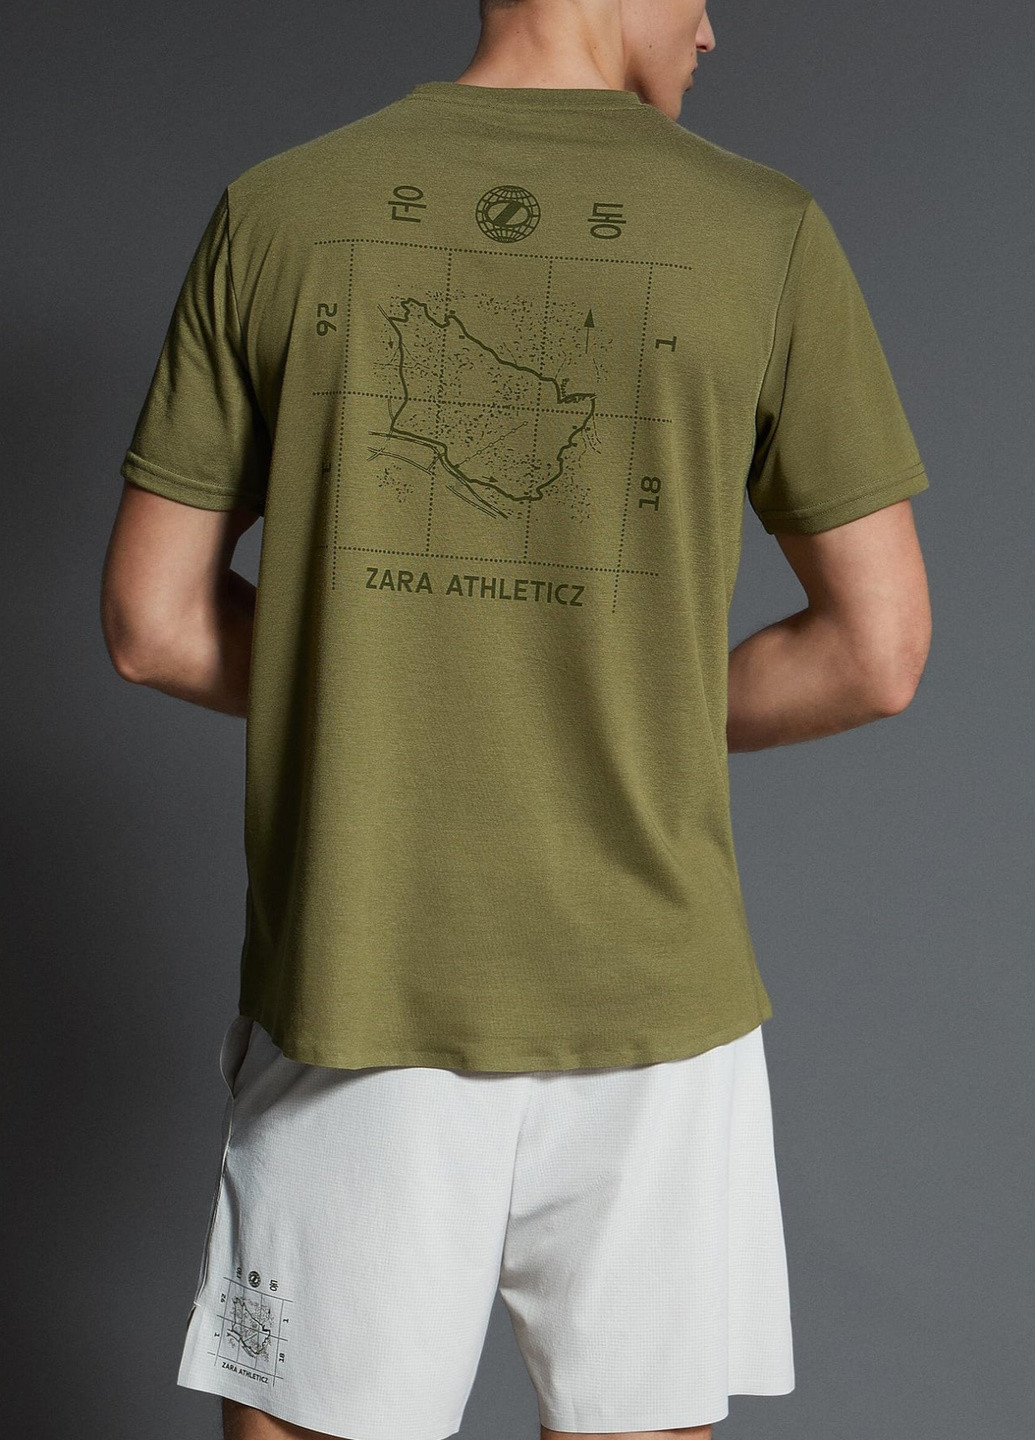 Хаки (оливковая) футболка Zara